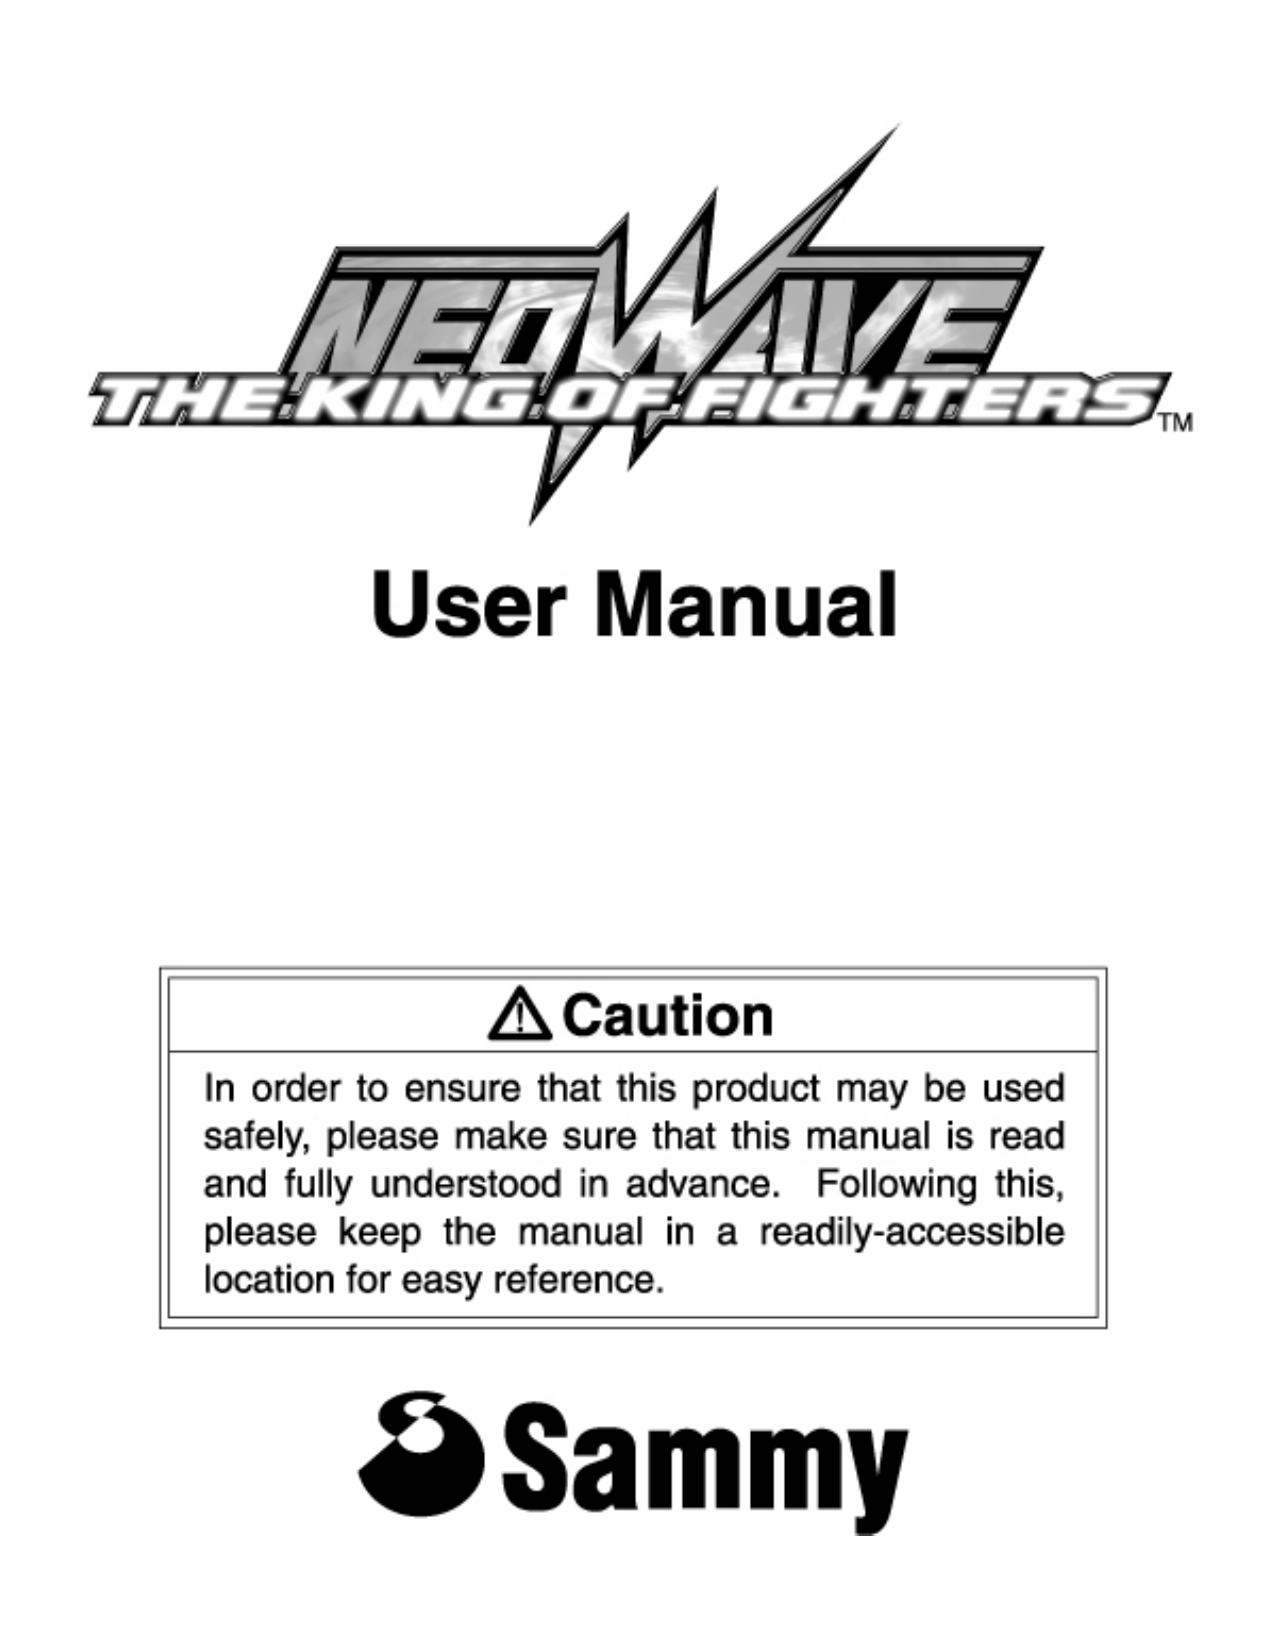 Manual KOF Neowave English